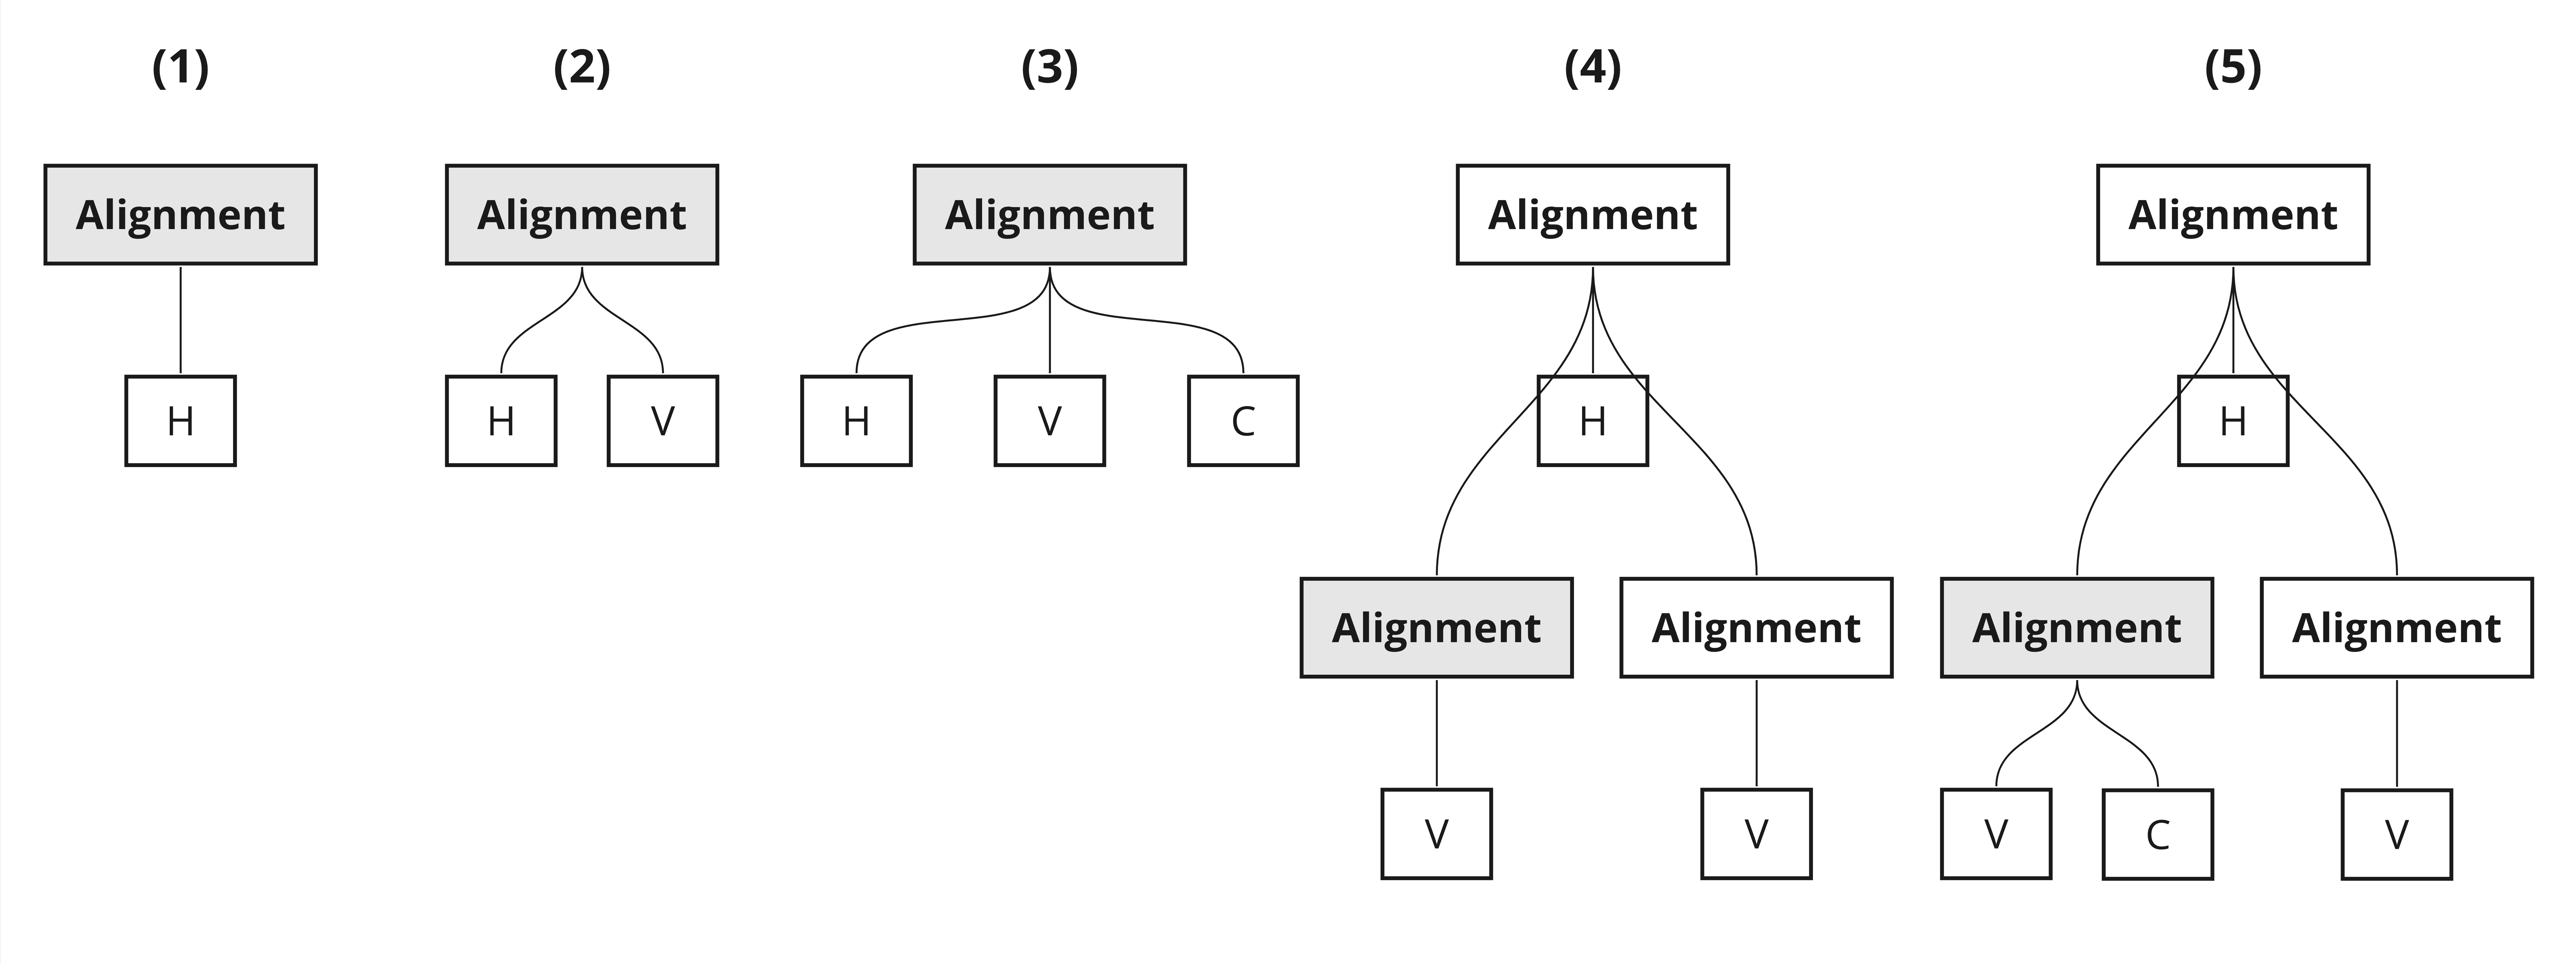 Alignment configurations